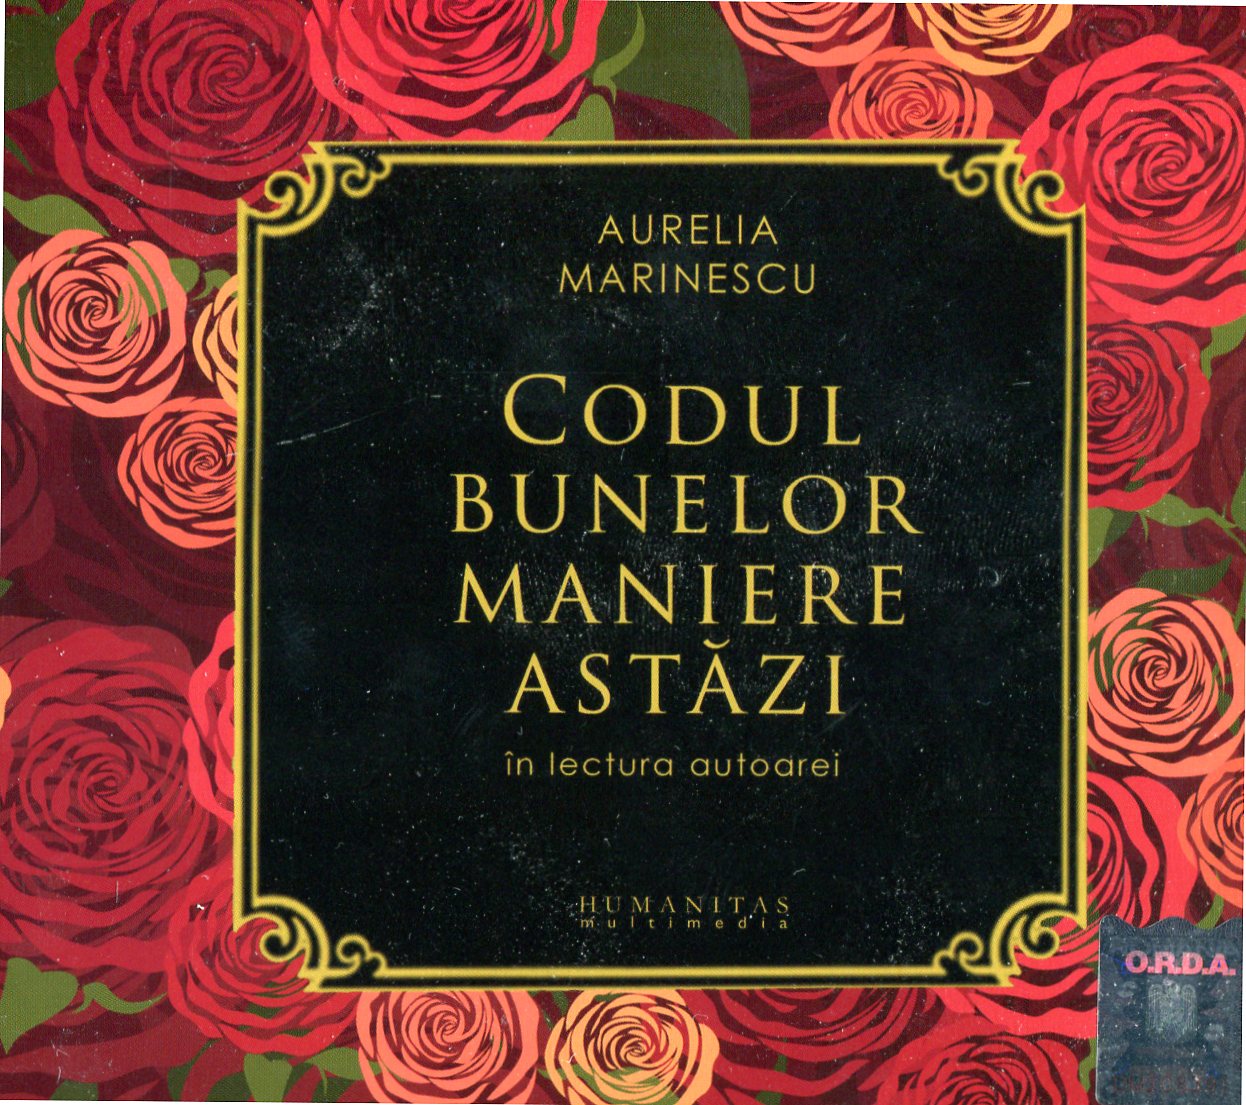 Audiobook Cd Codul Bunelor Maniere Astazi - Aurelia Marinescu. In Lectura Autoarei